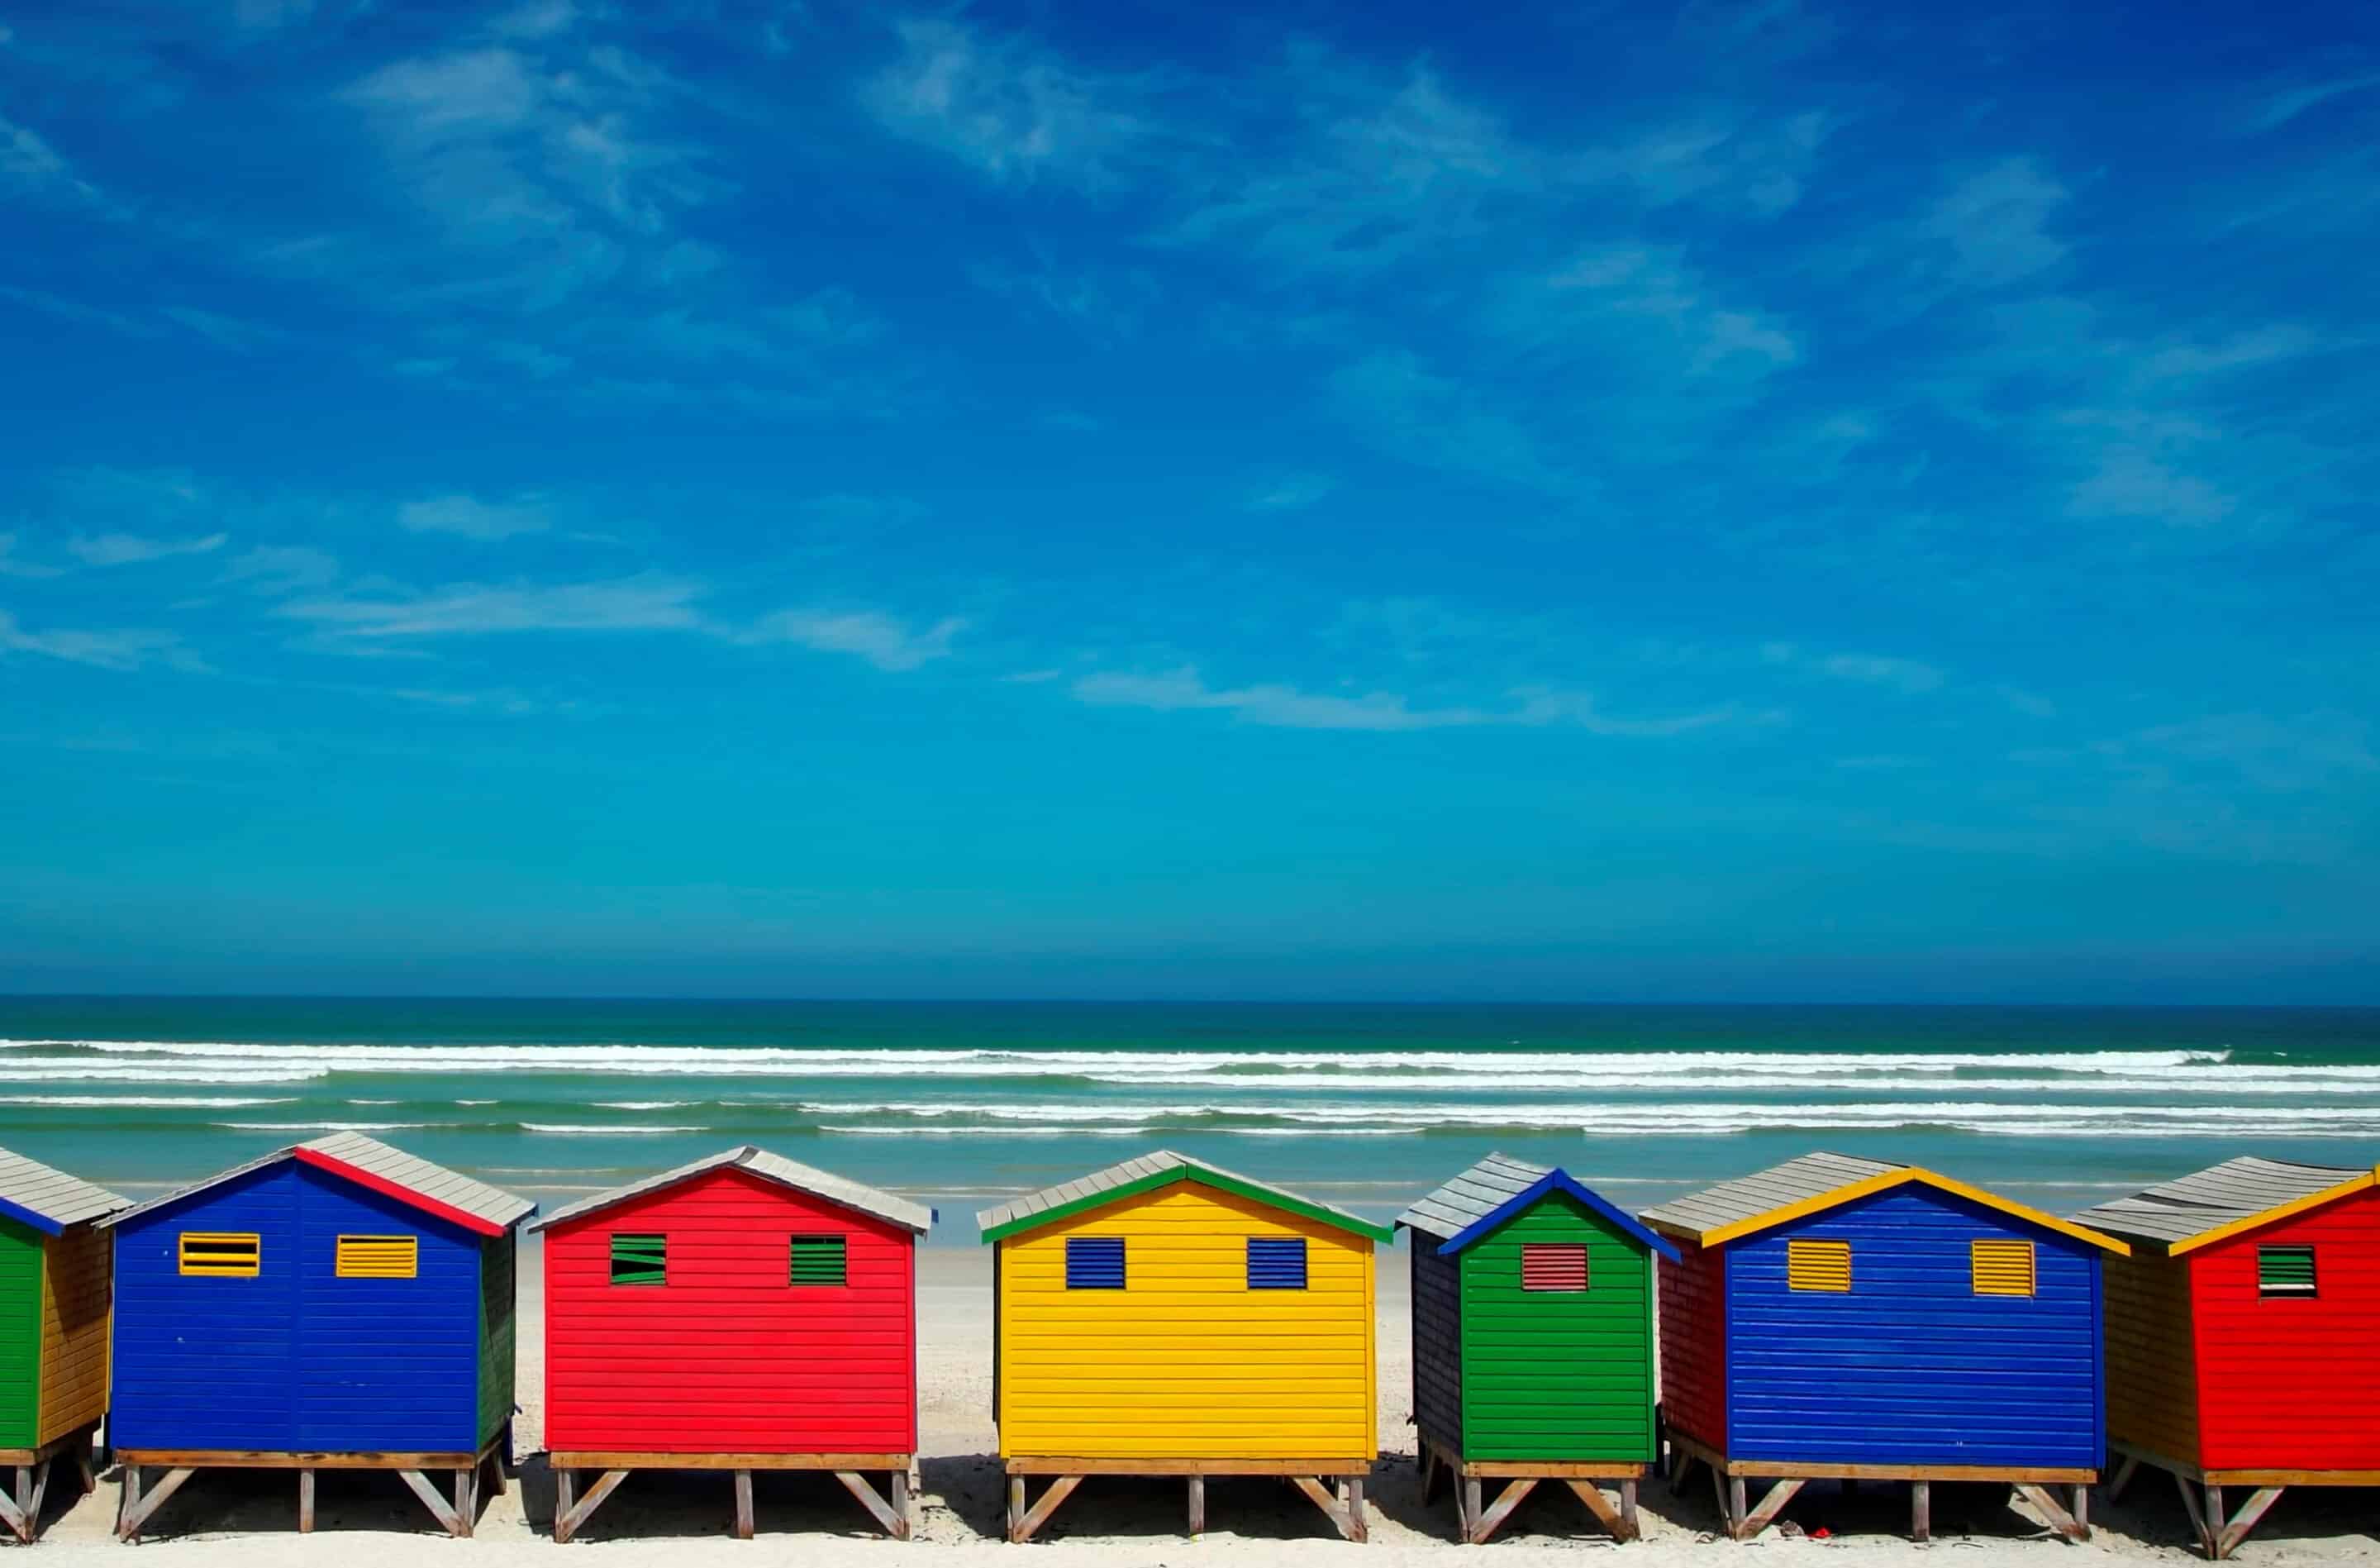 coloured beach houses against a backdrop of the sea.